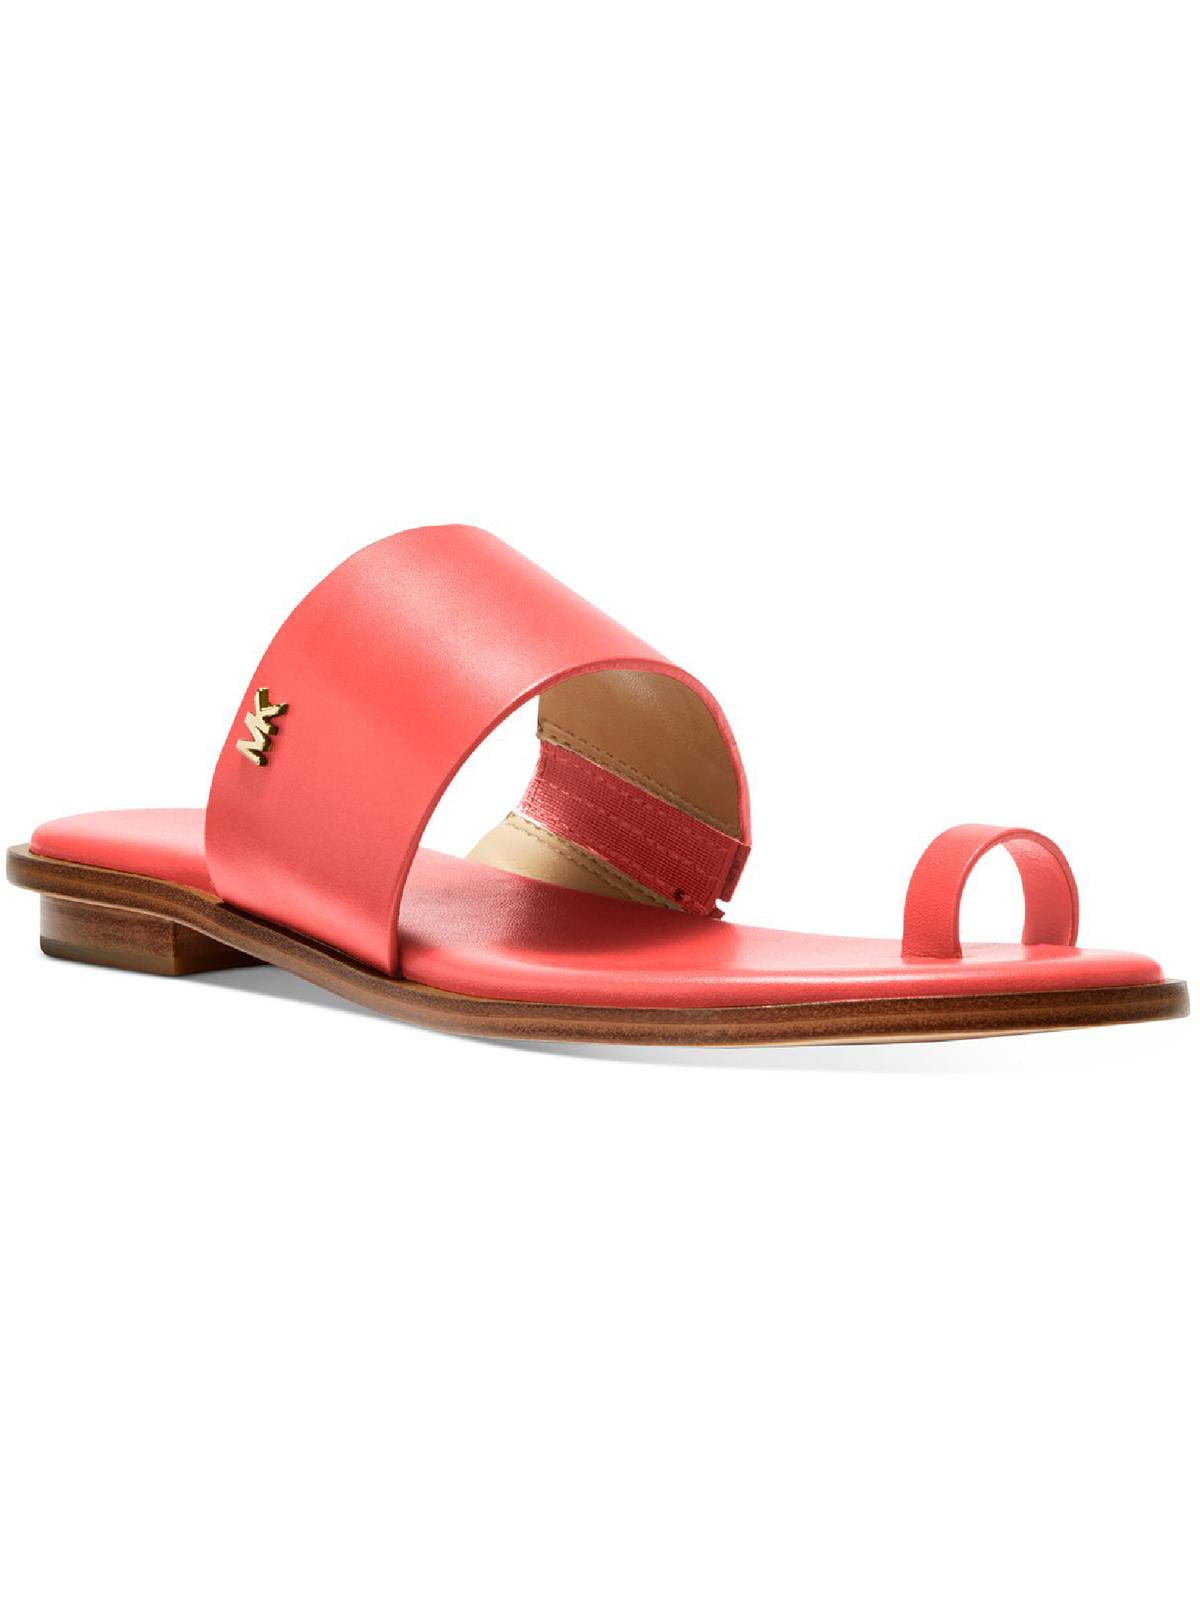 Patti Leather Slide Sandal | Michael Kors